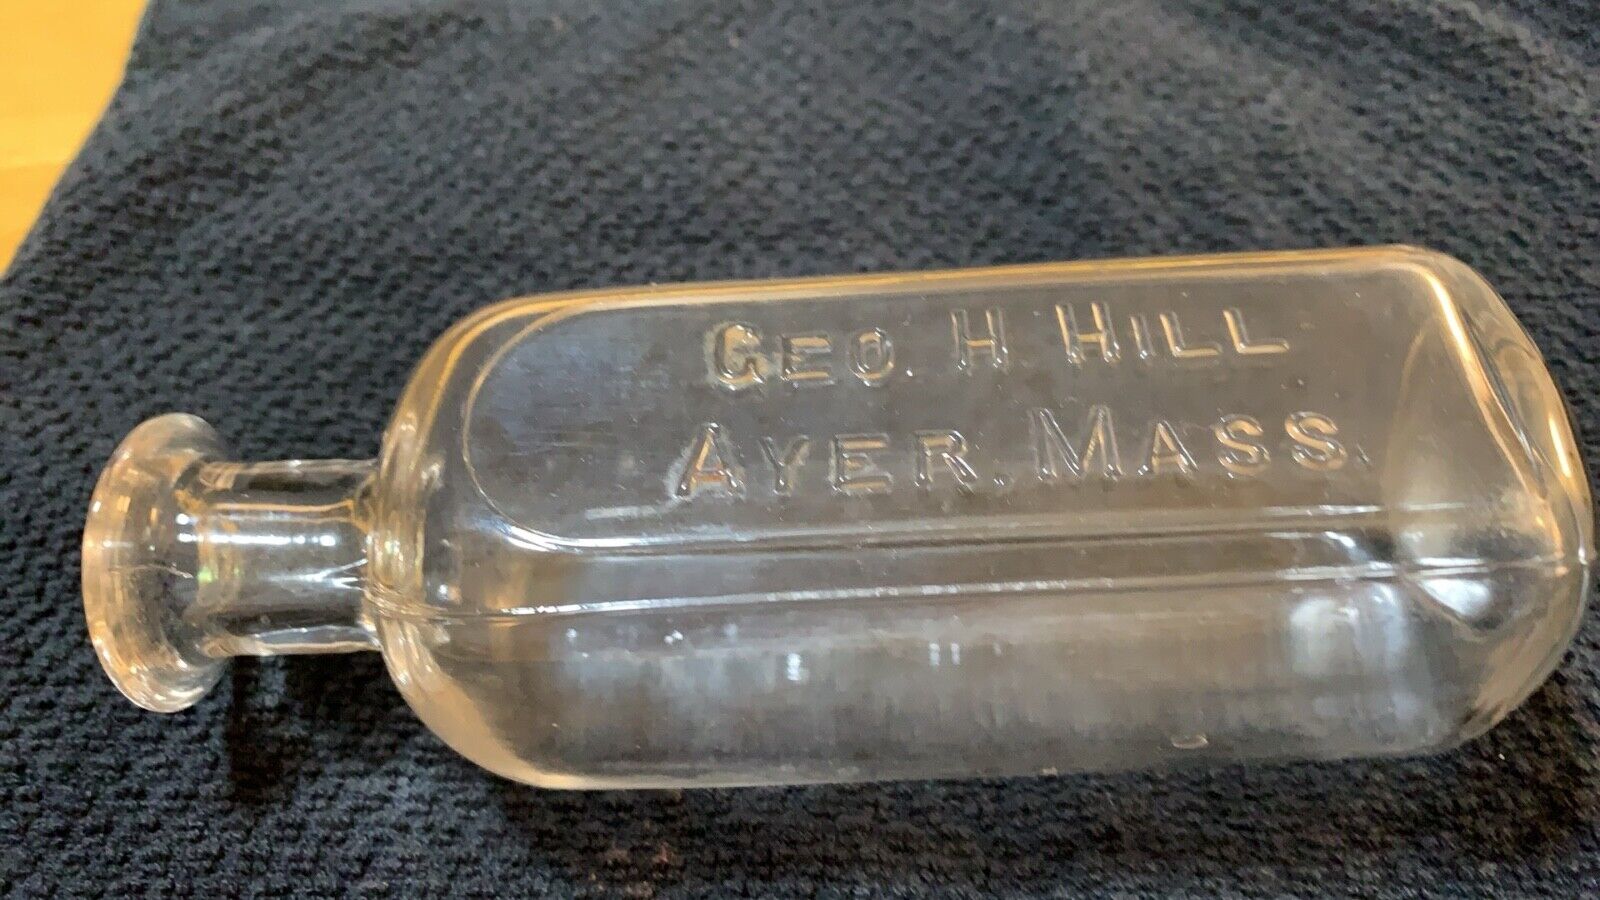 Old Medicine Bottle -Geo H. Hill  Ayer, MASS USA